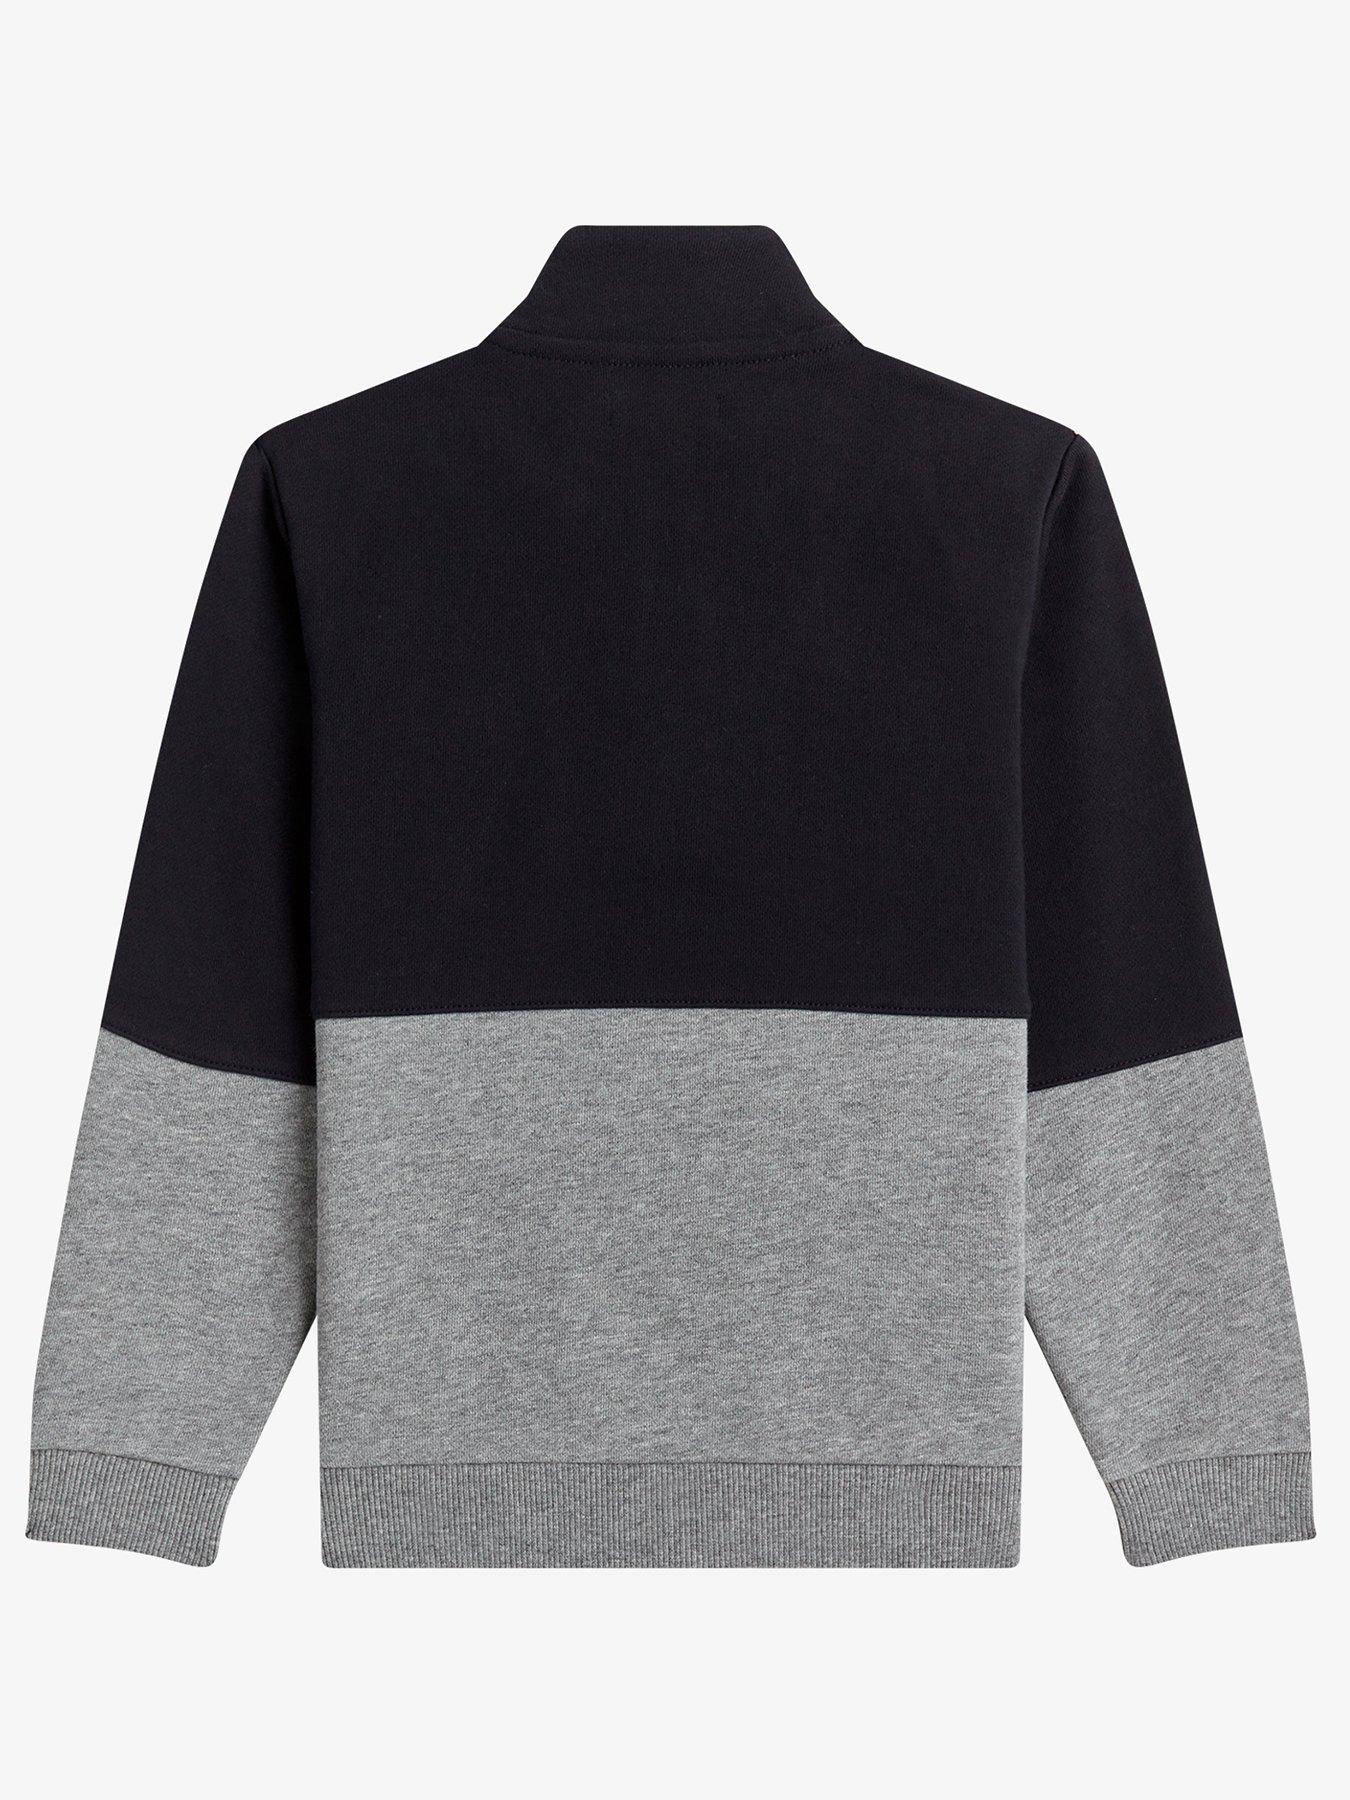  Boys Colour Block Half Zip Sweatshirt - Grey Marl